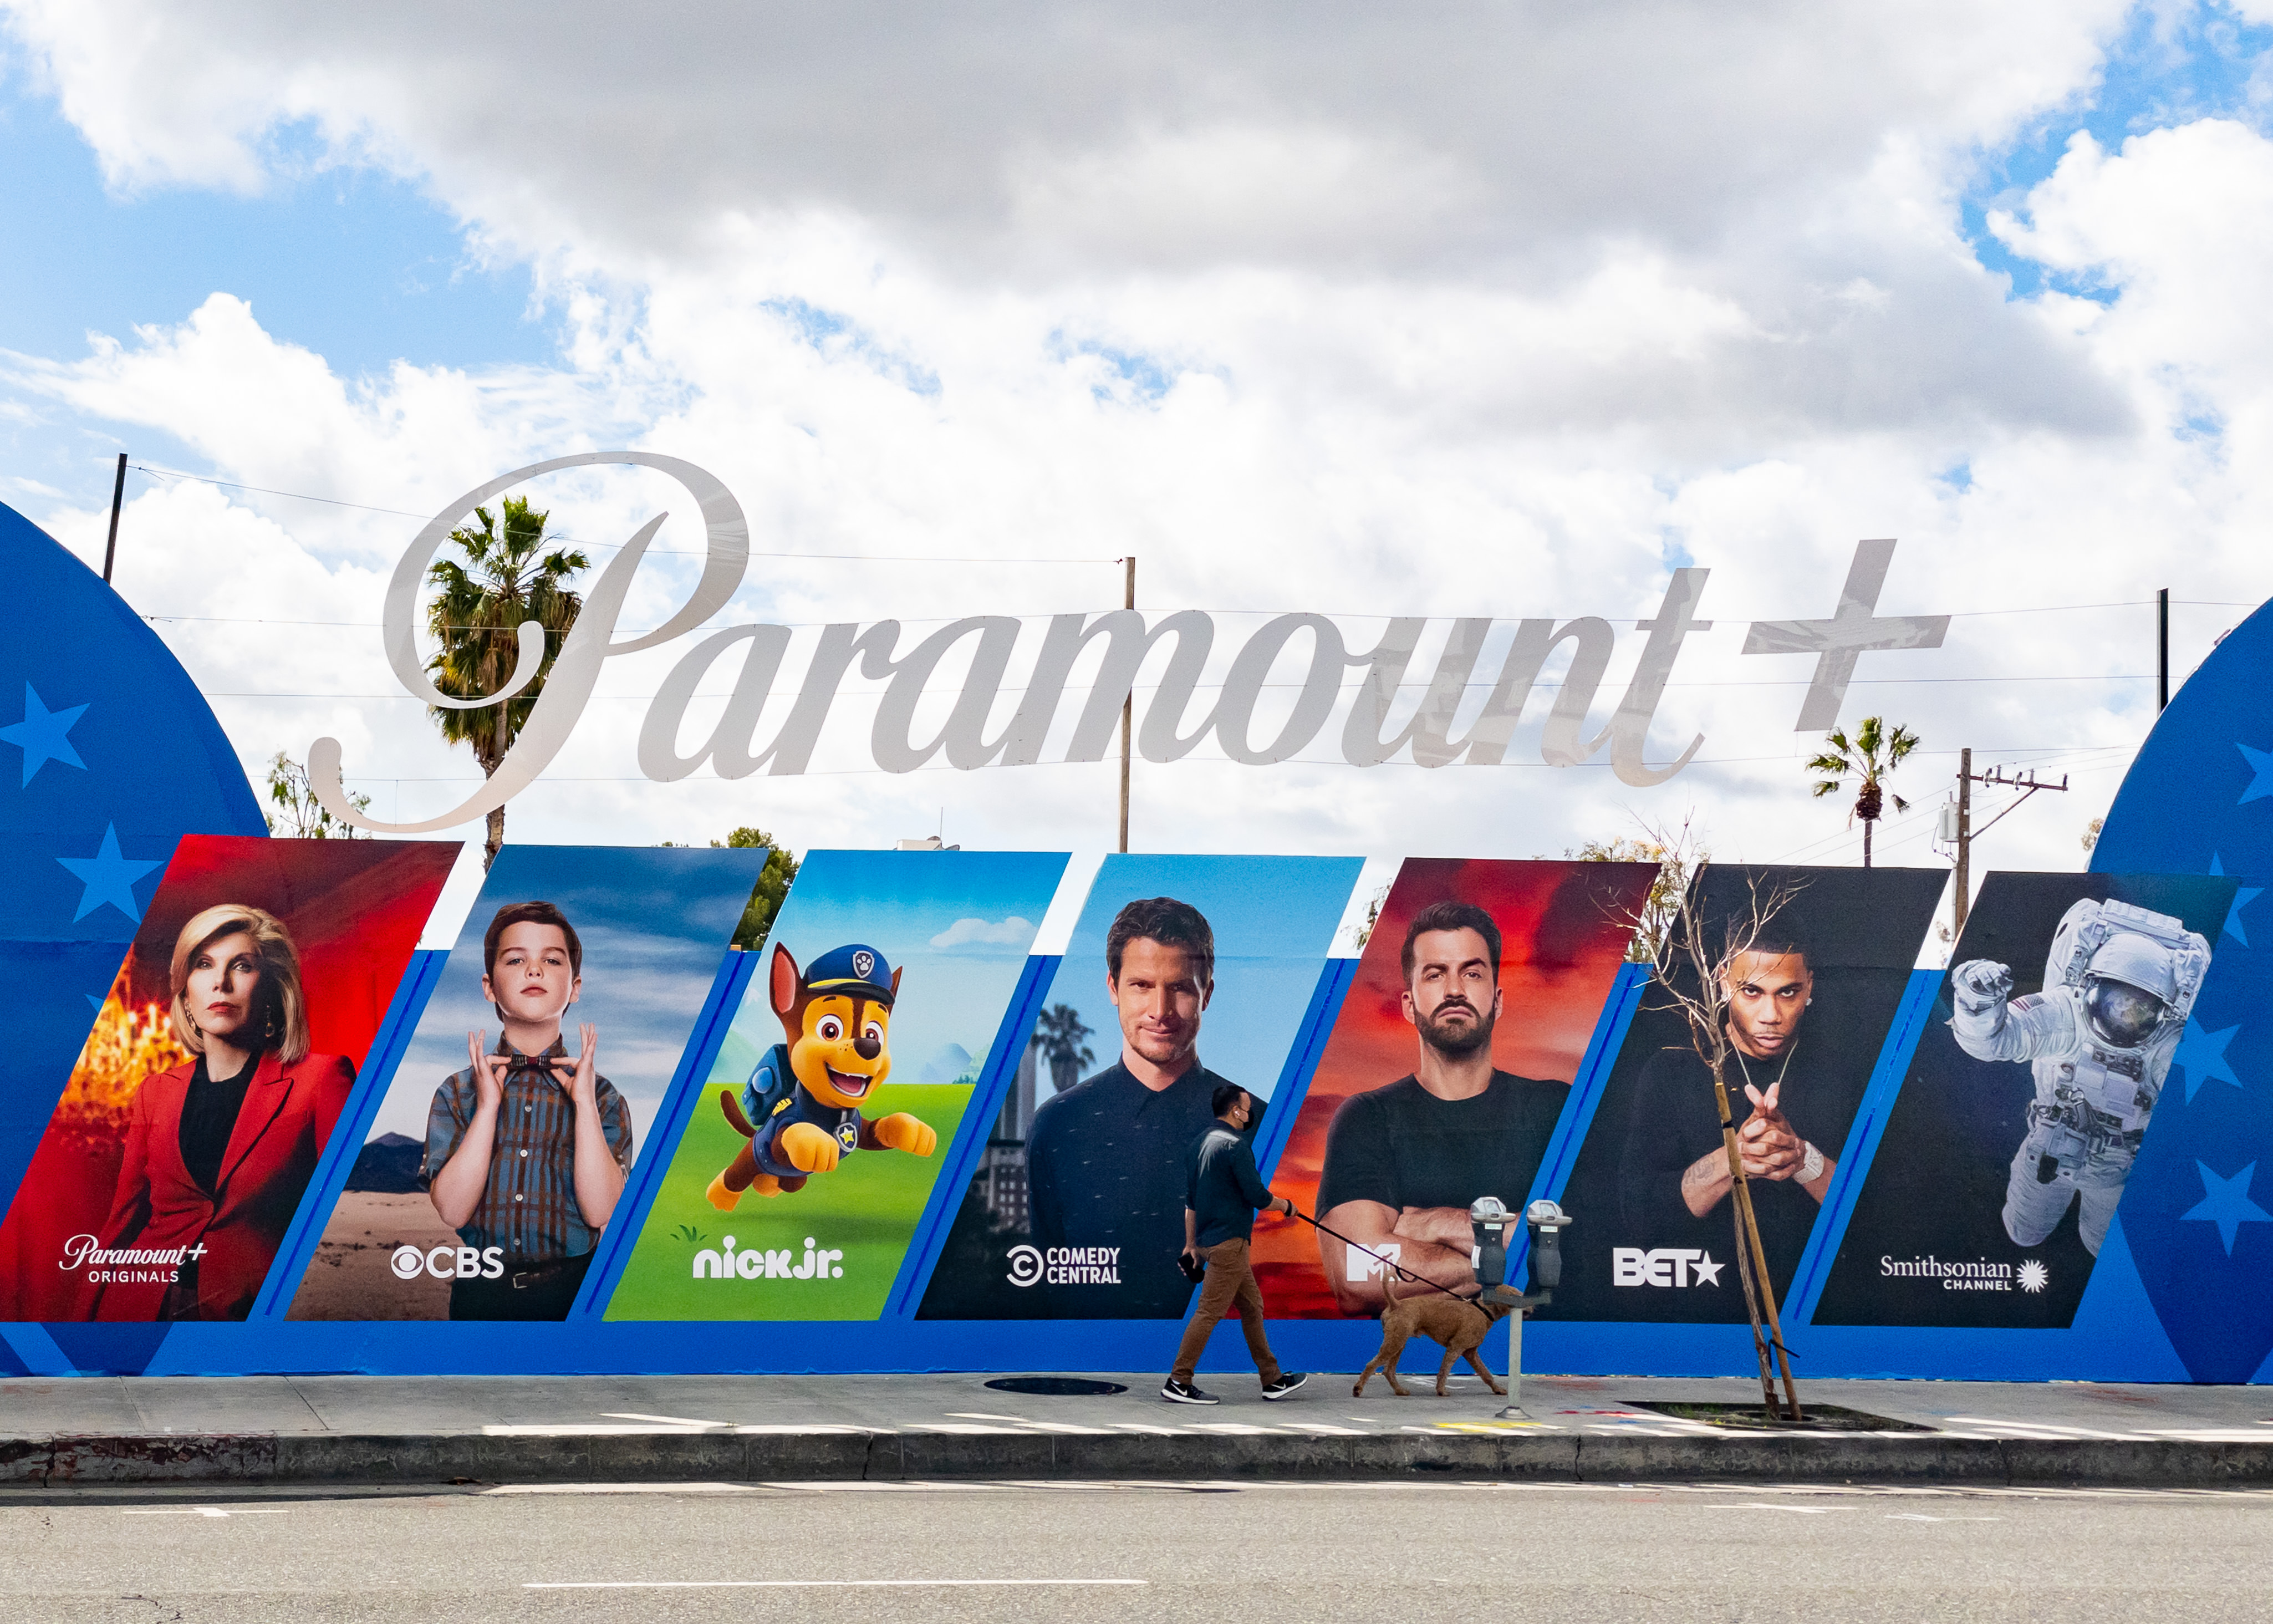 General views of the Paramount+ billboard